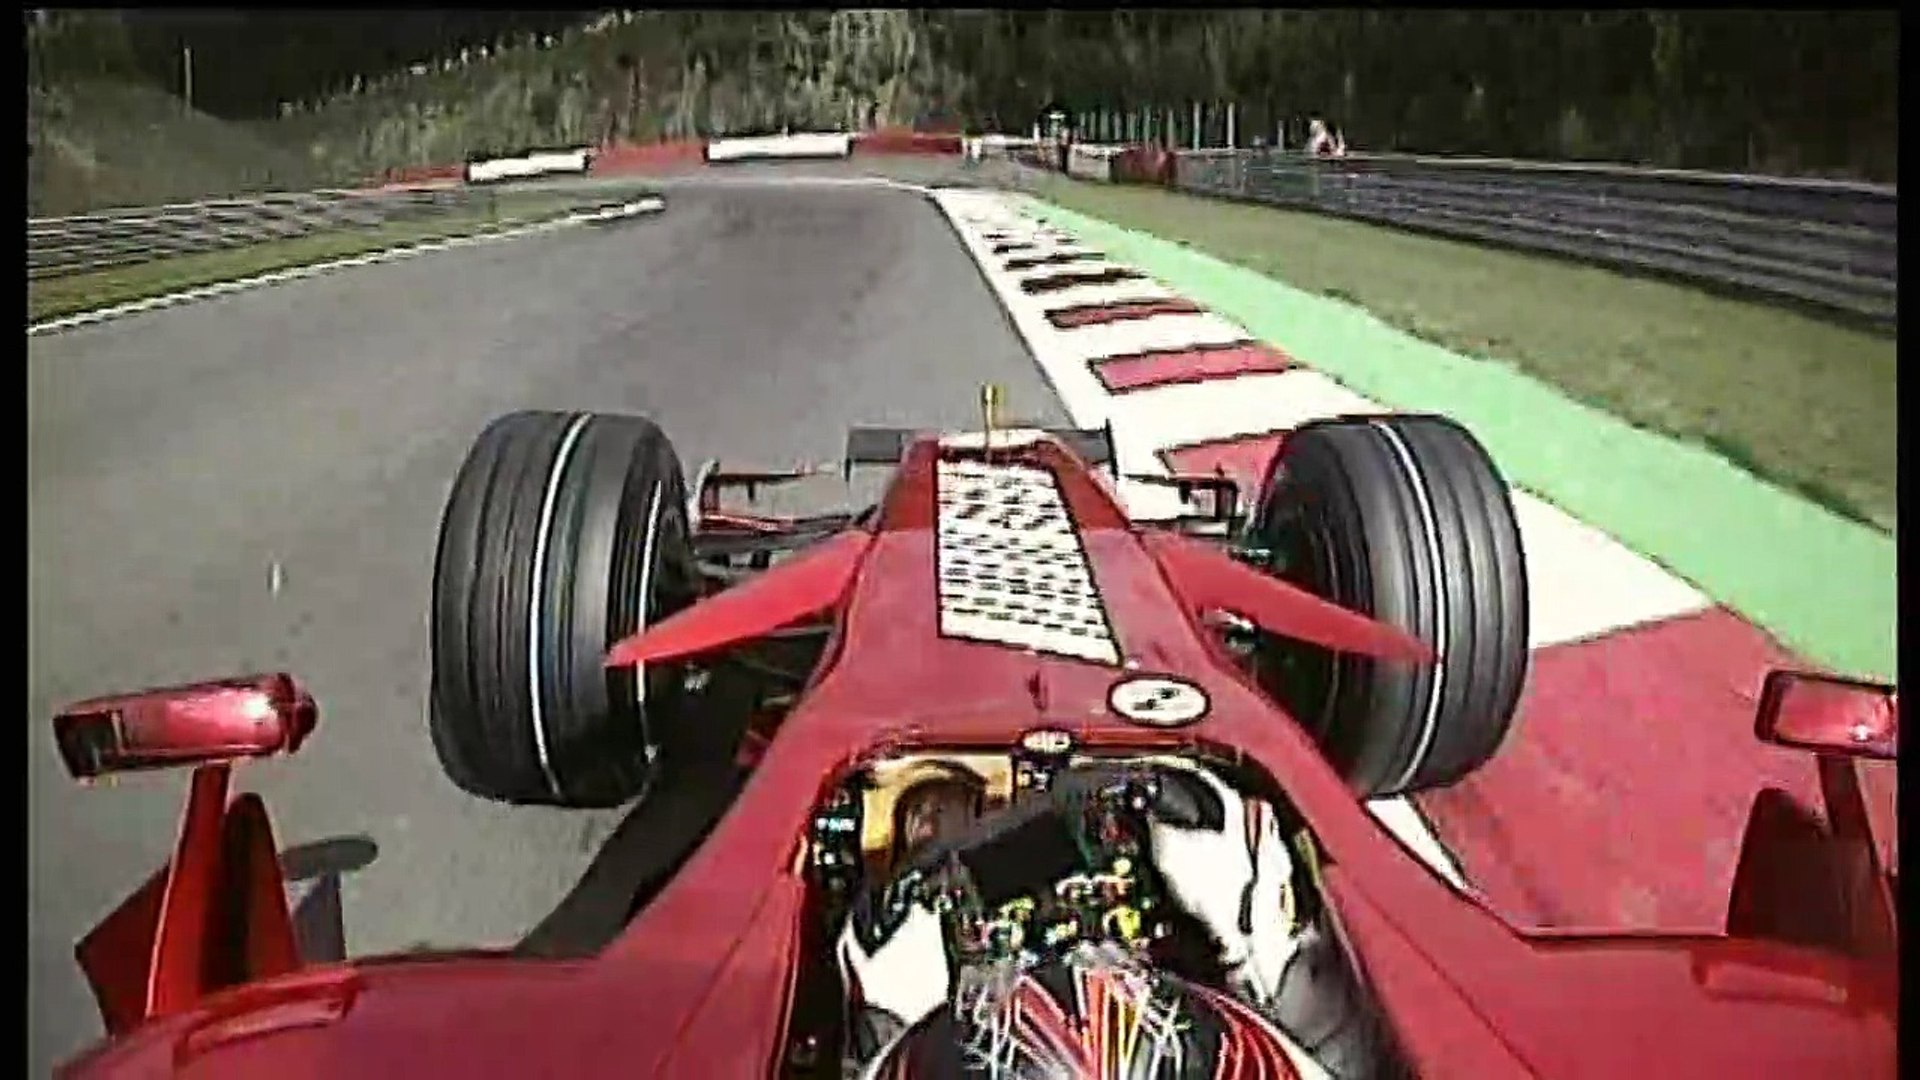 Kimi Raikkonen: O Campeão improvável de 2007